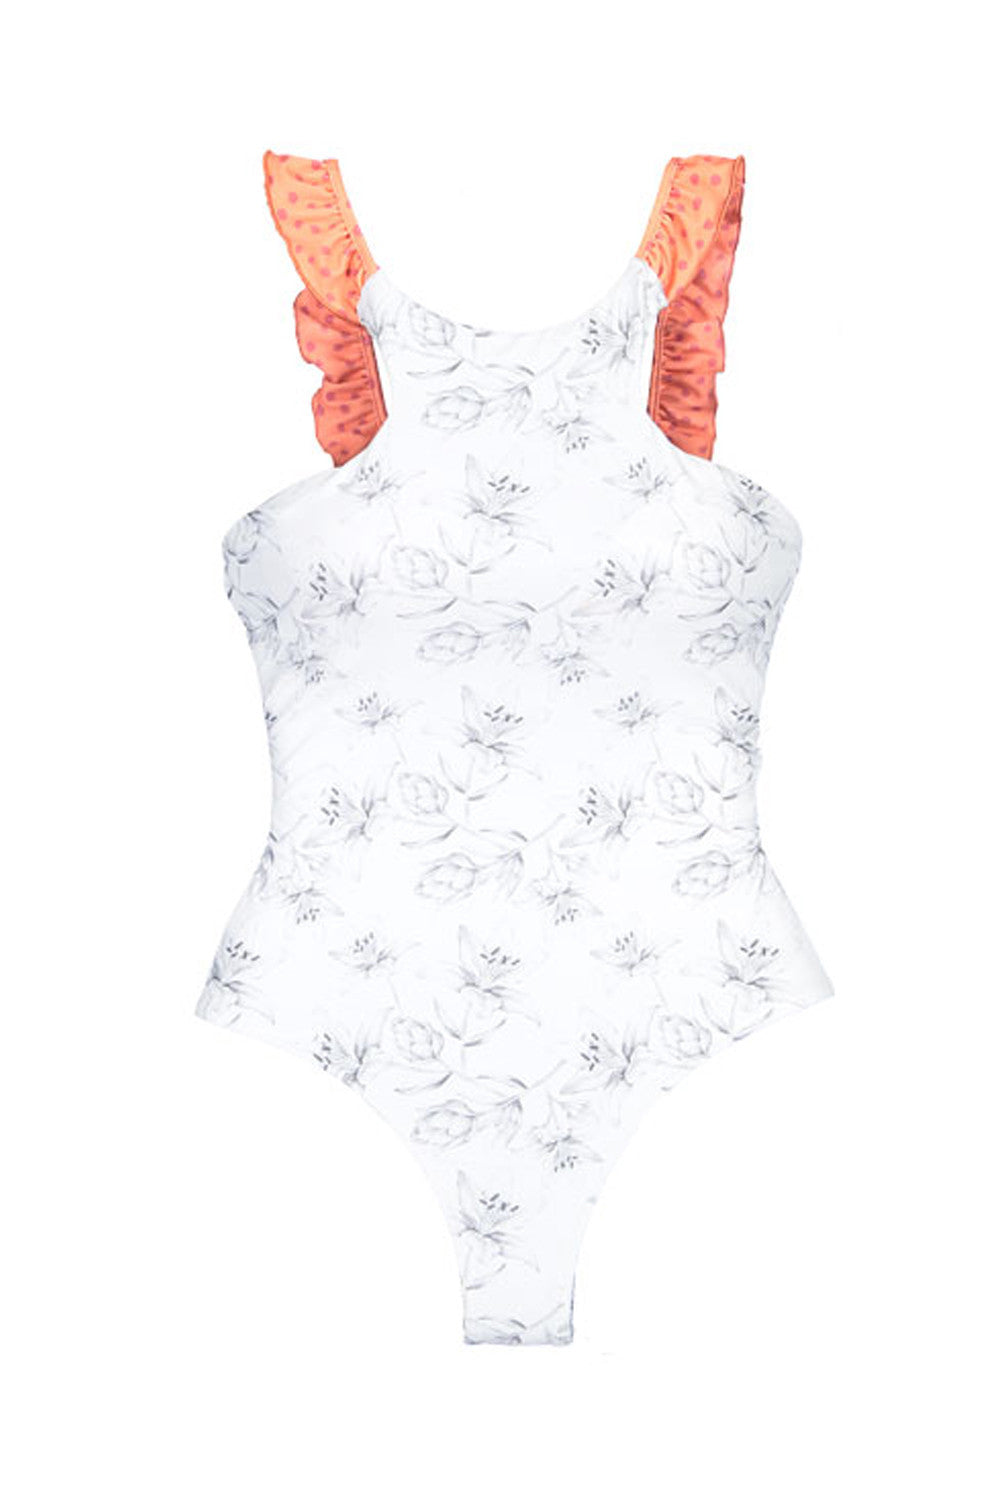 LC411639-1-S, LC411639-1-M, LC411639-1-L, LC411639-1-XL, White Women's Tie Back One Piece Swimsuit Floral Printing Swimwear